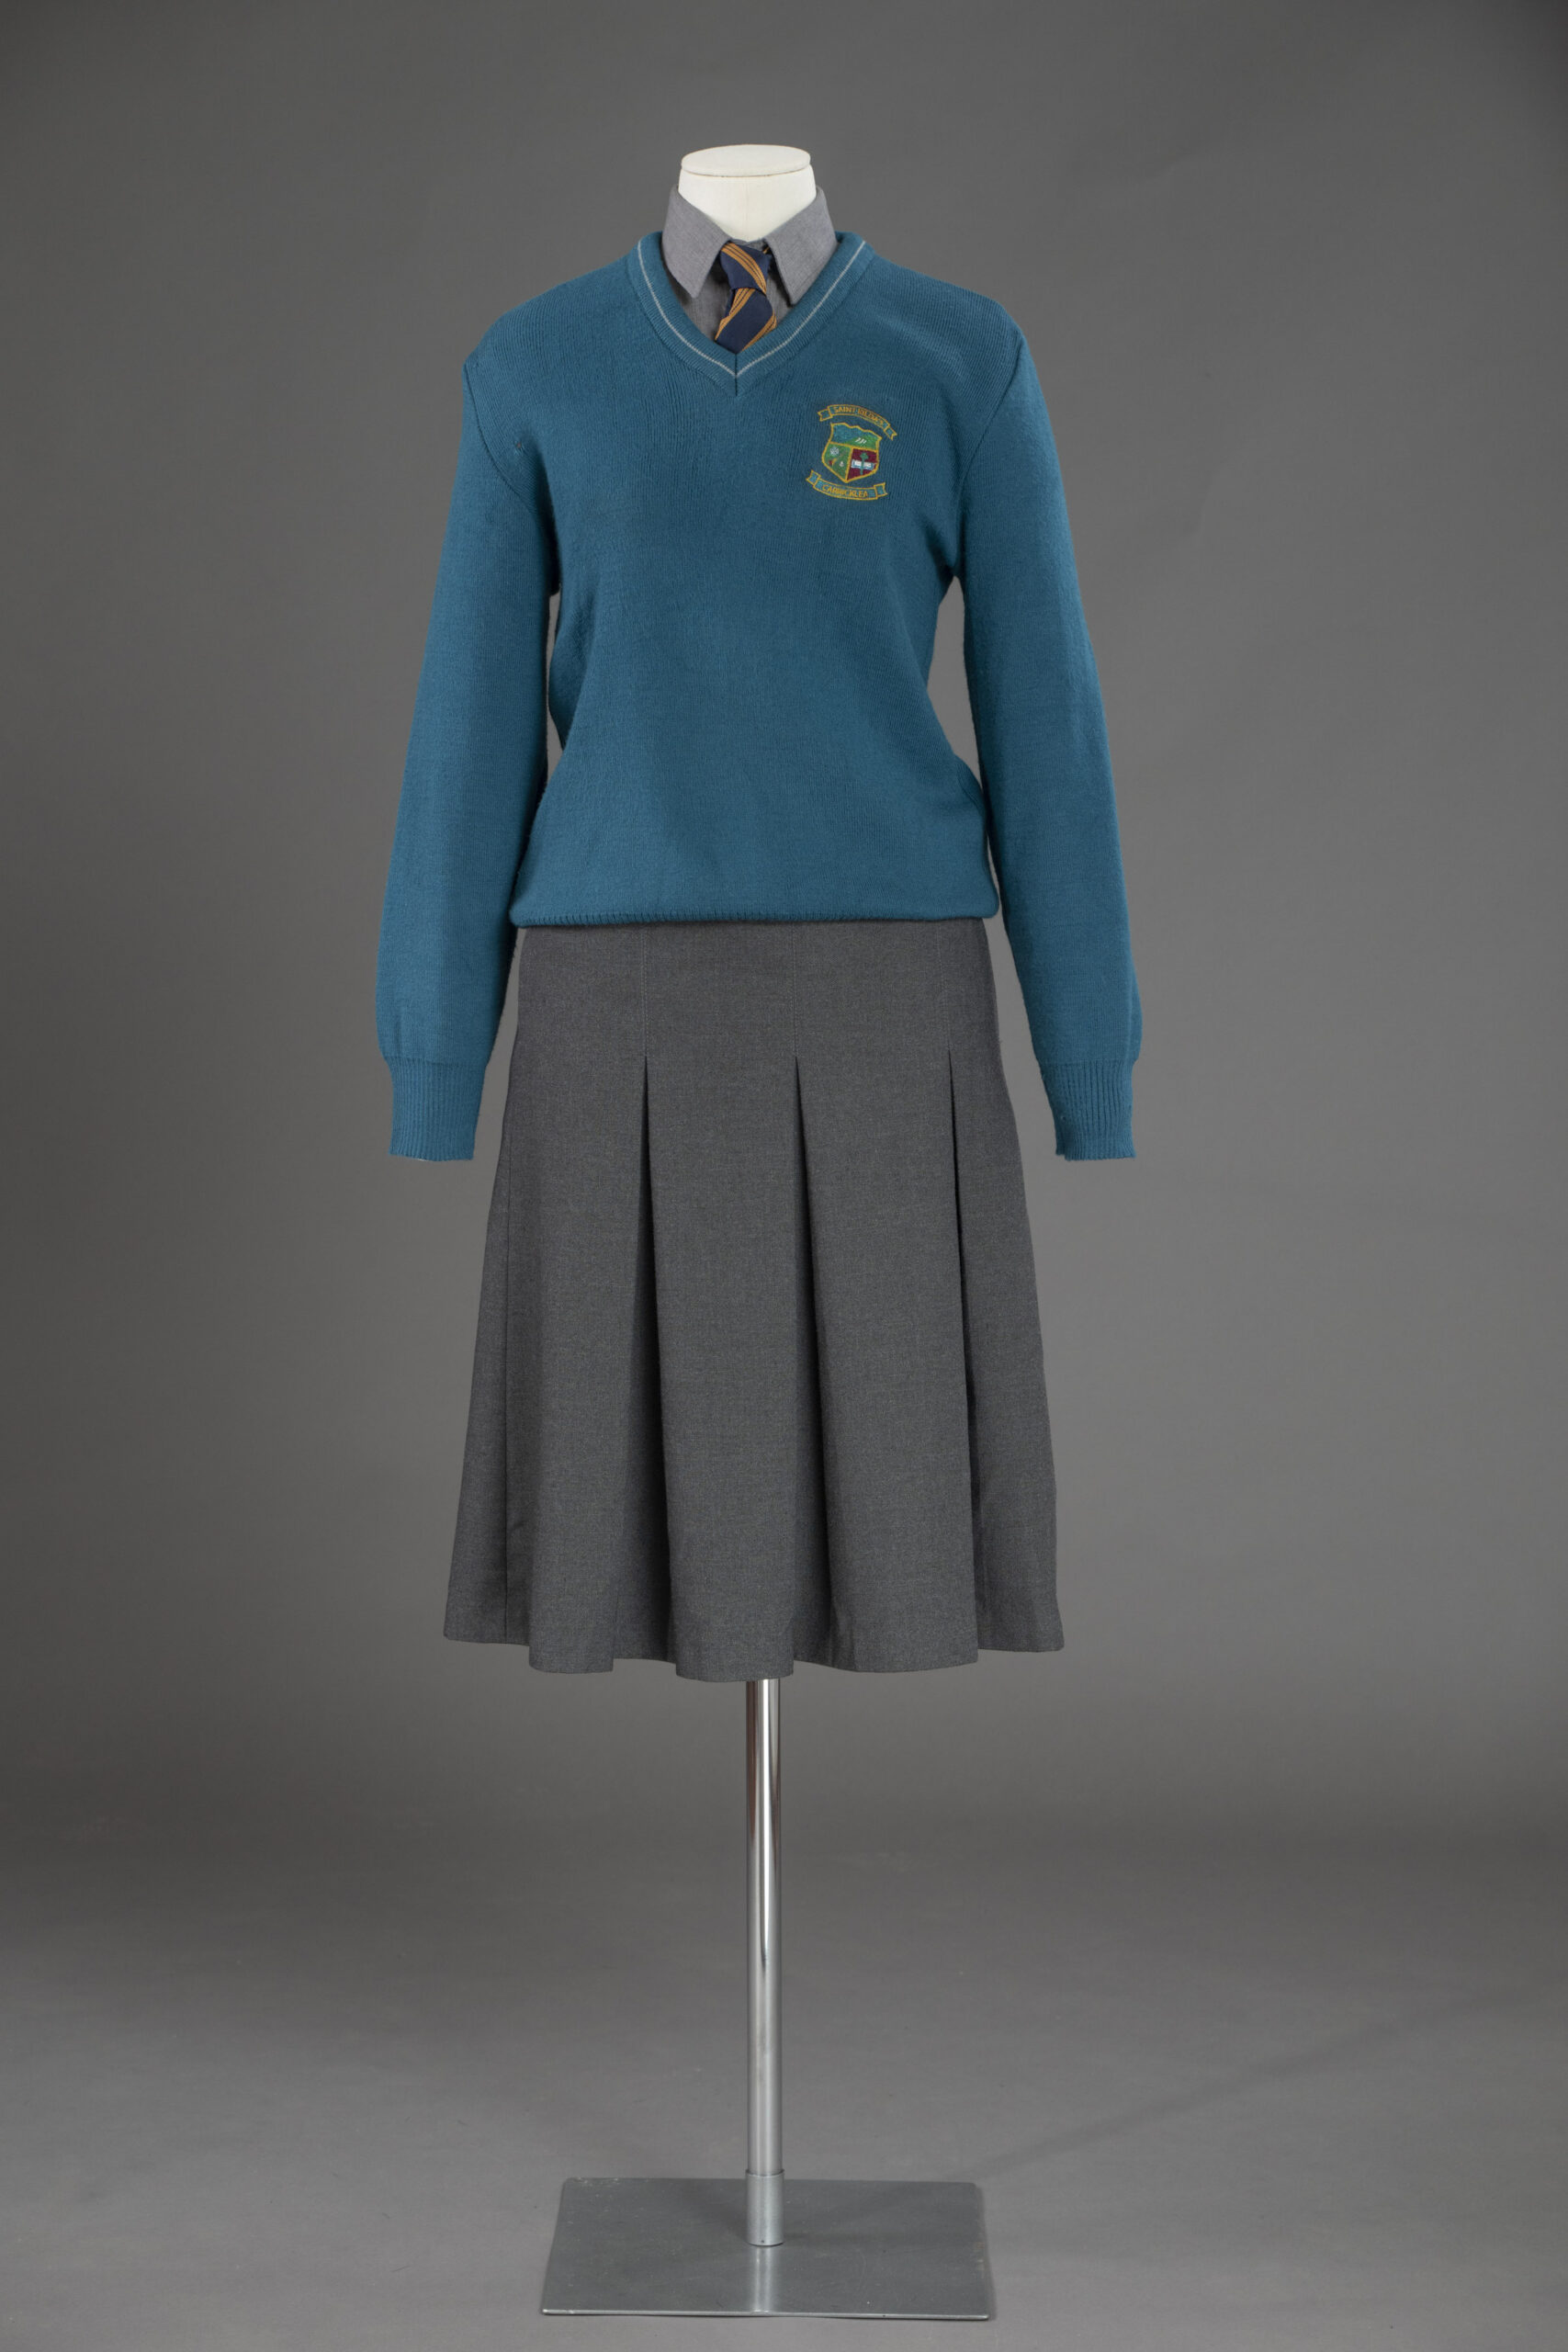 Daisy Edgar Jones as Marianne - school uniform